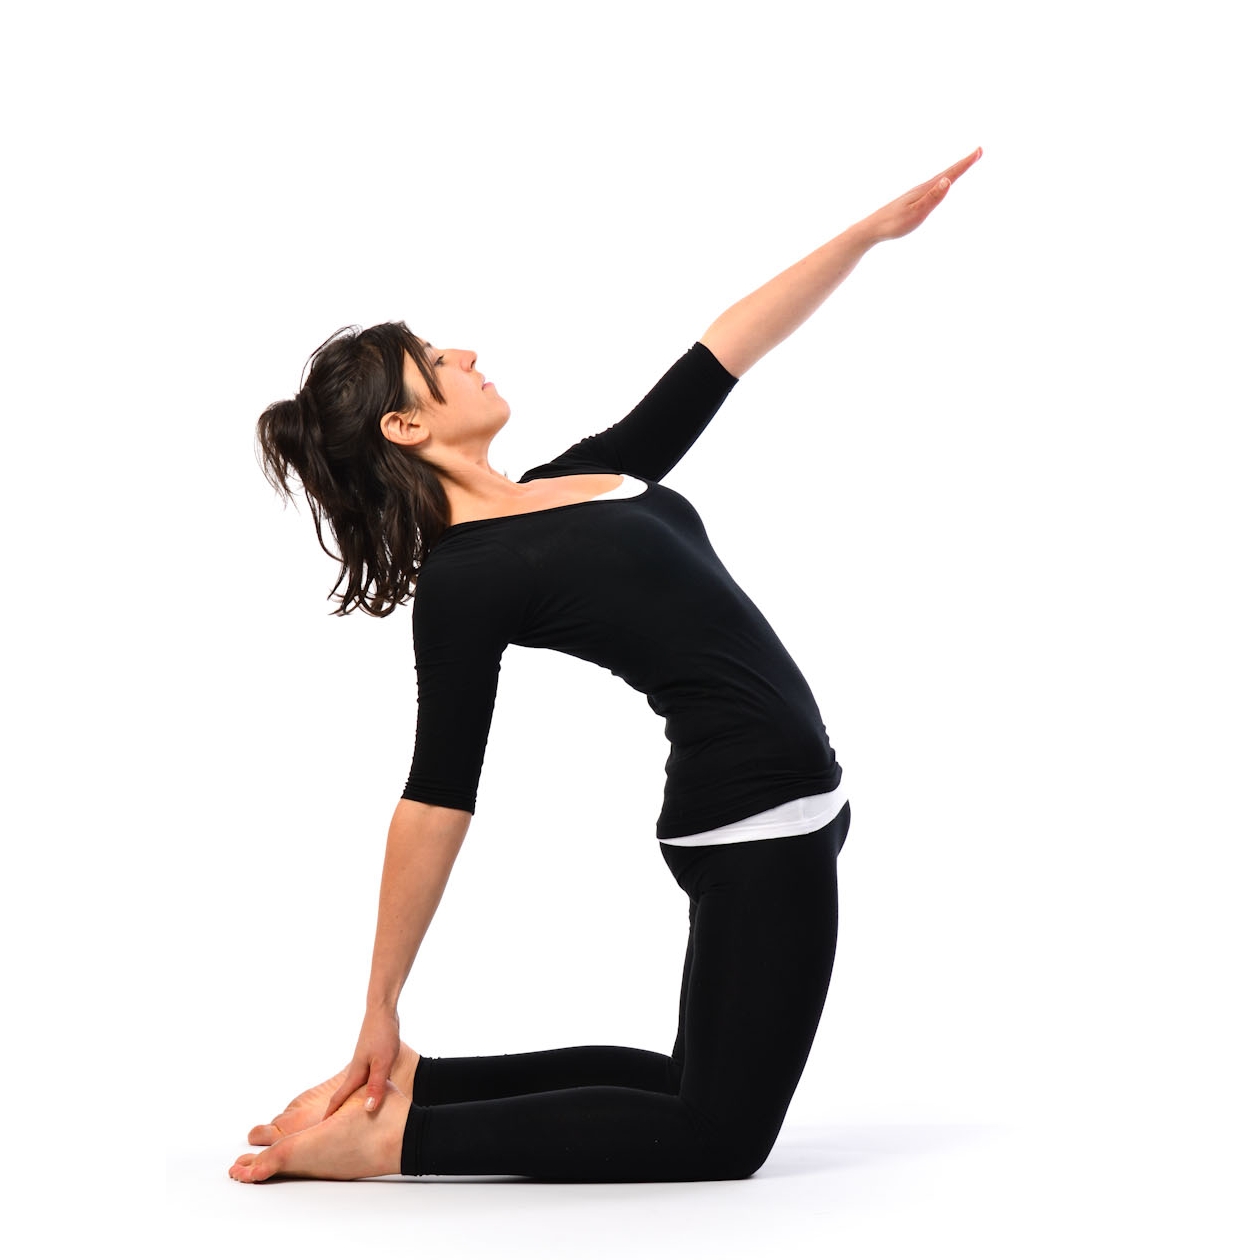 Yoga for Beginners
